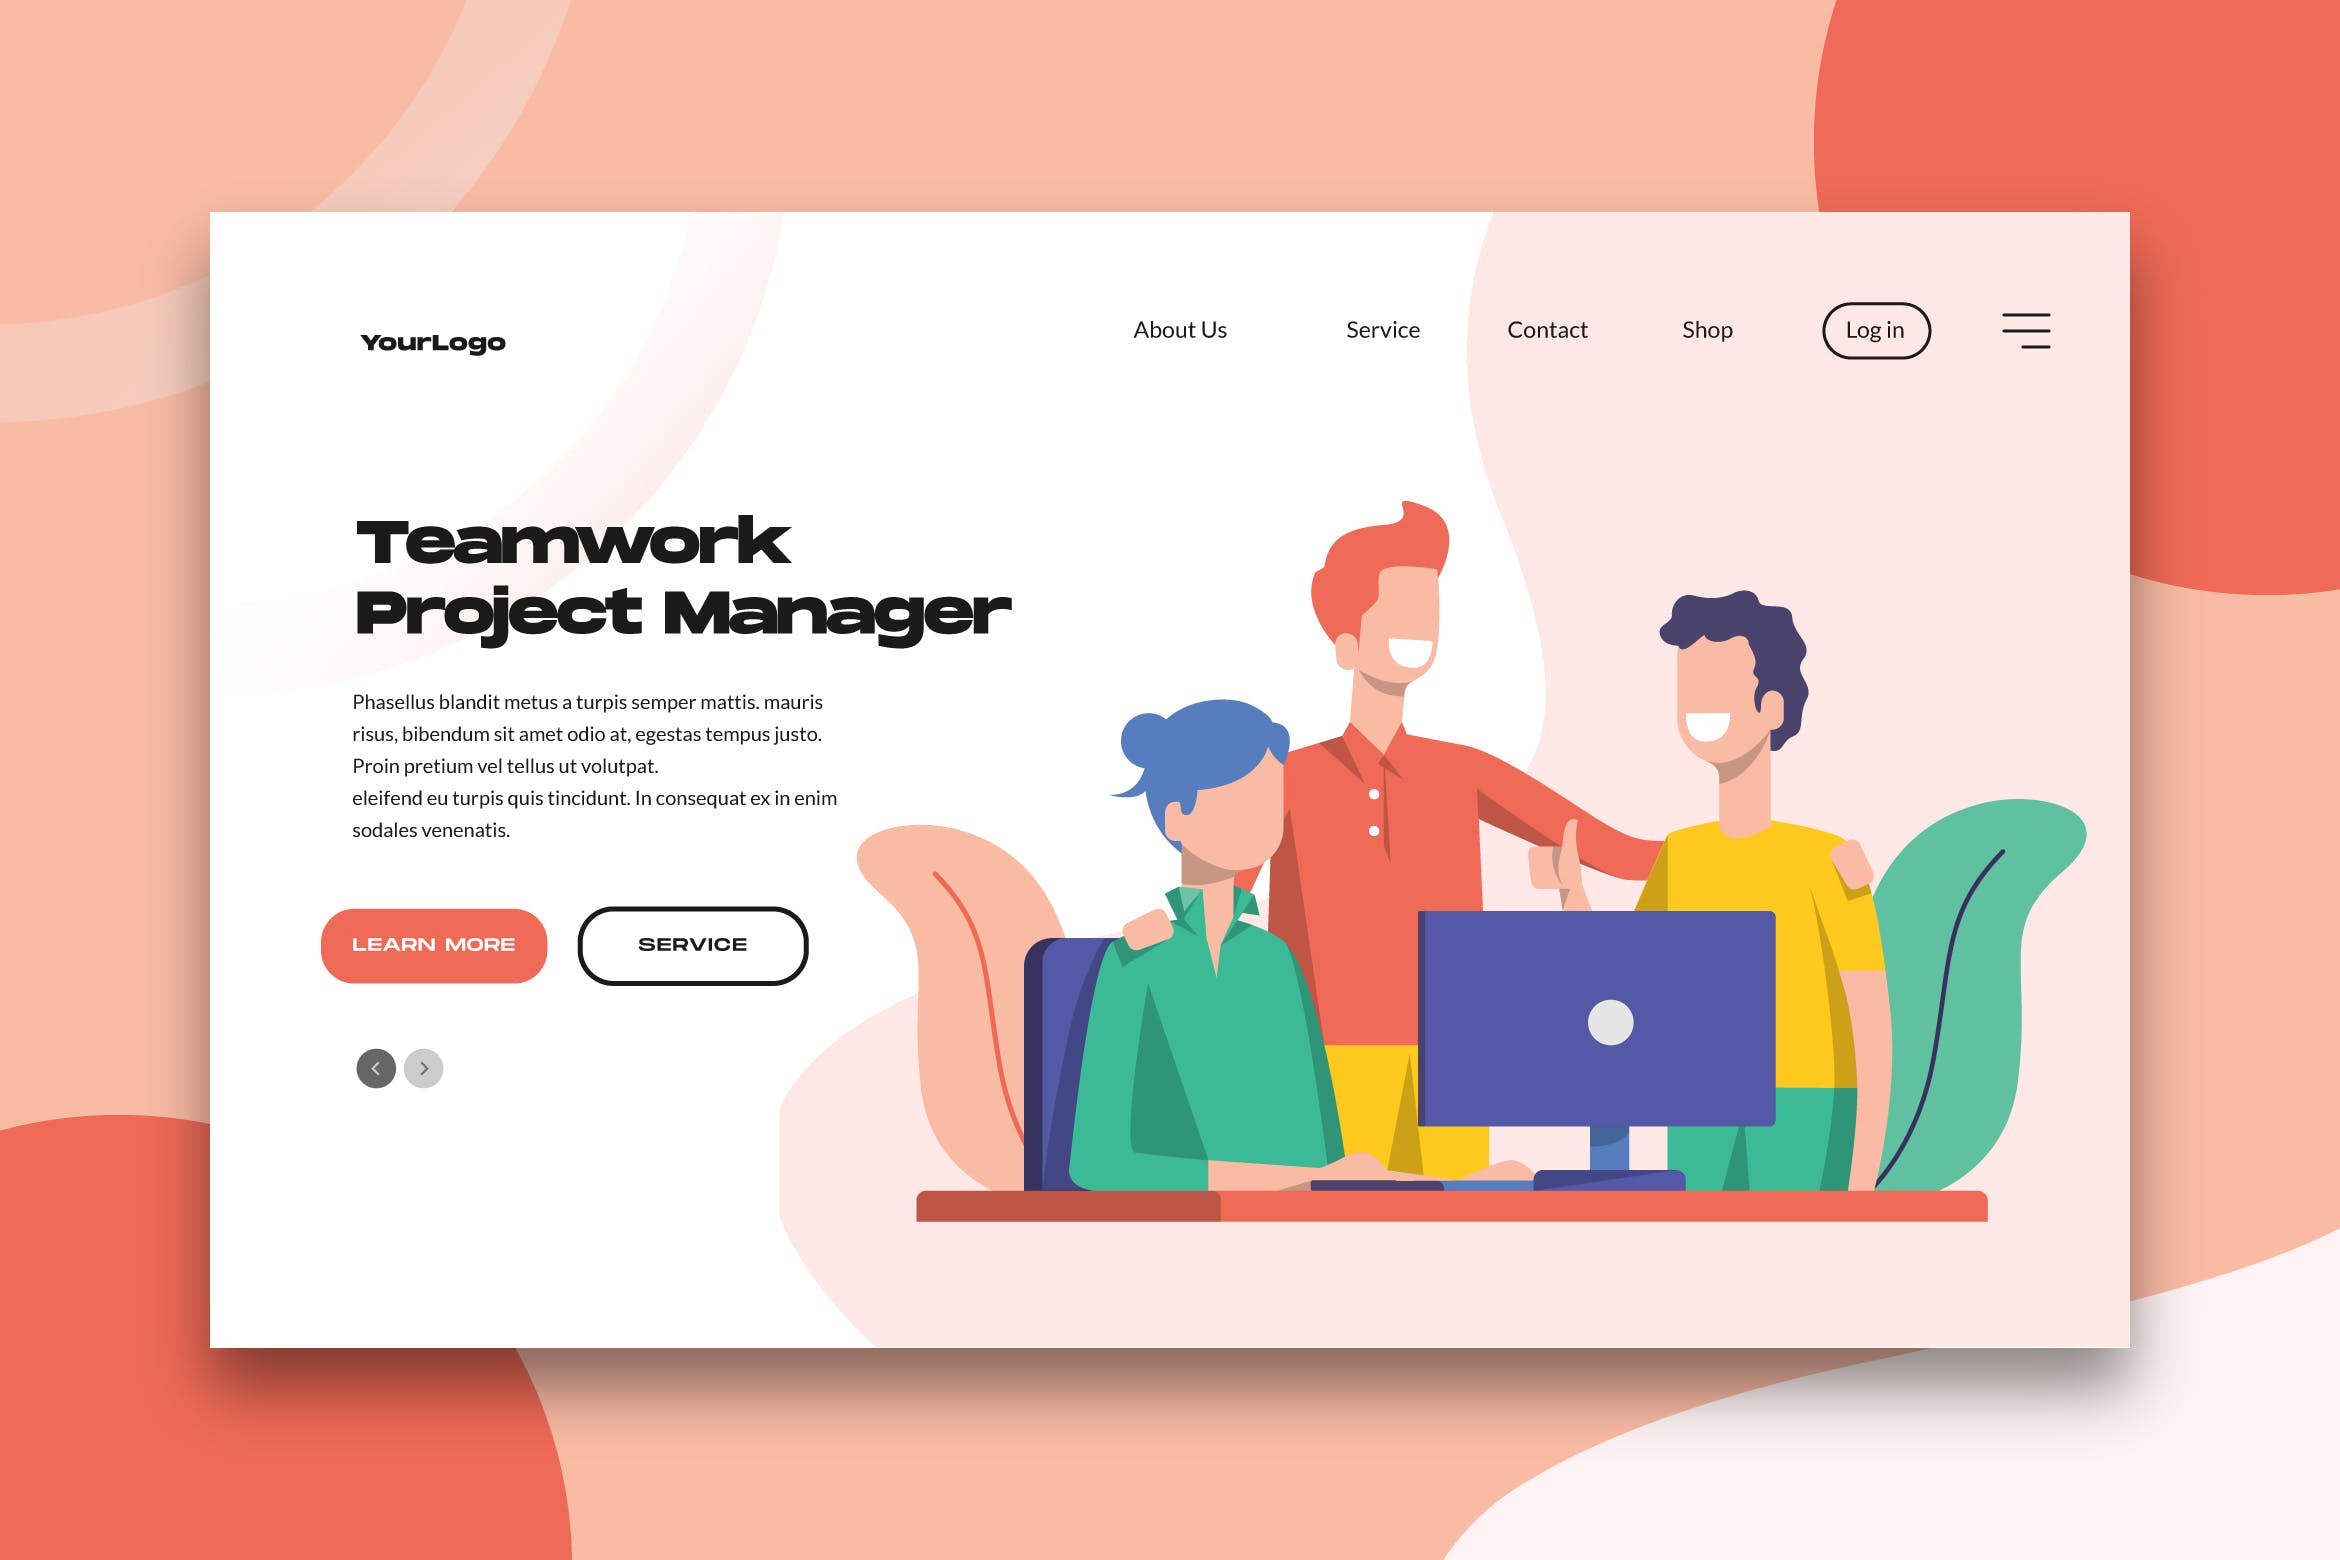 团队合作网站Banner设计项目经理主题概念插画素材 Teamwork Project Manager Banner & Landing Page设计素材模板